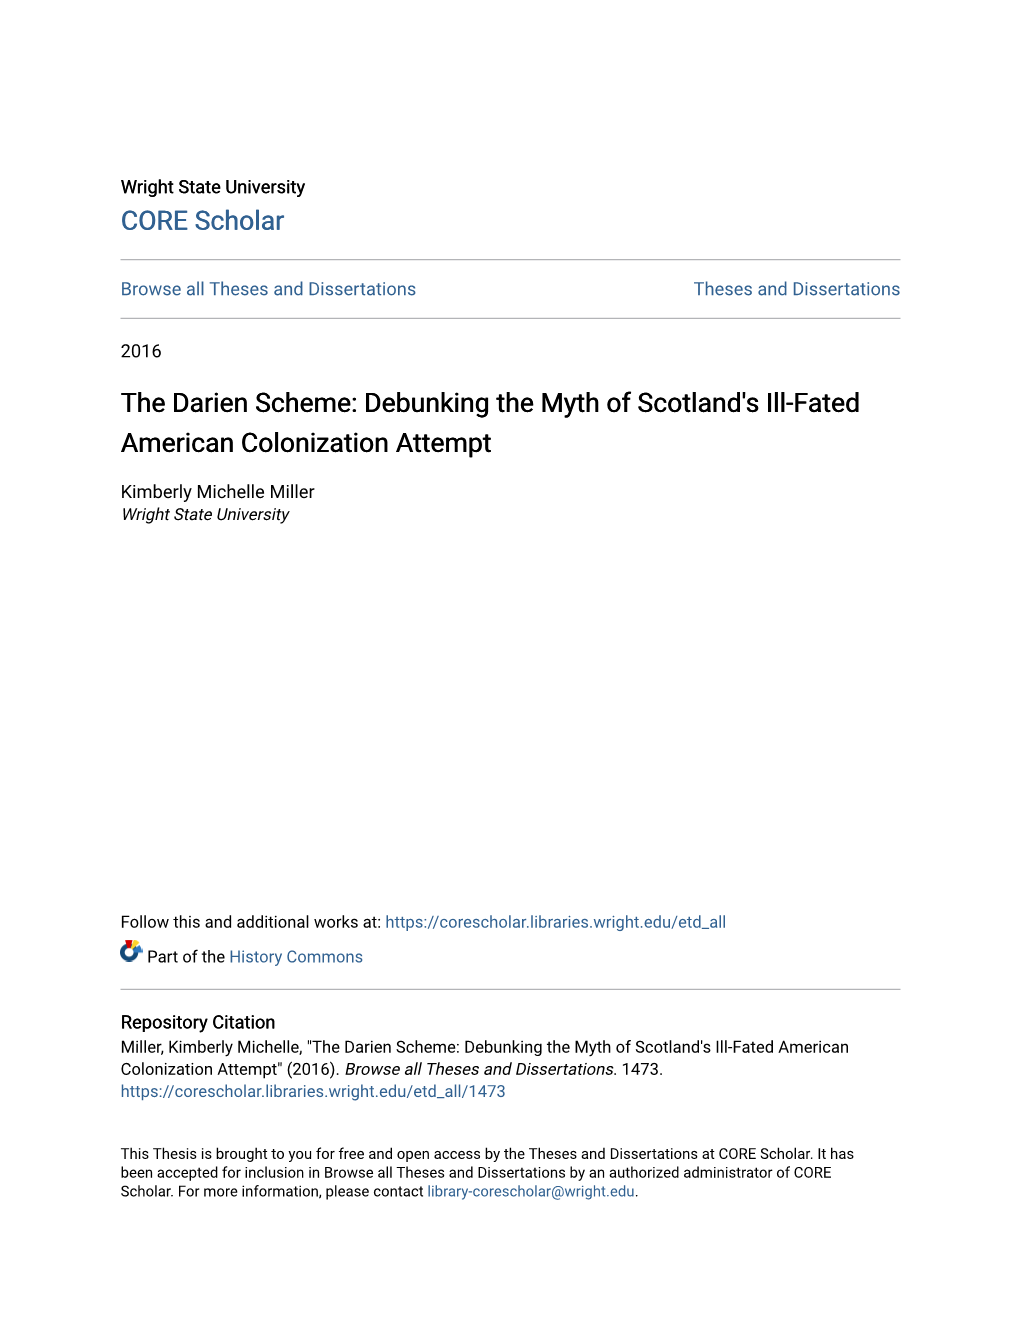 The Darien Scheme: Debunking the Myth of Scotland's Ill-Fated American Colonization Attempt